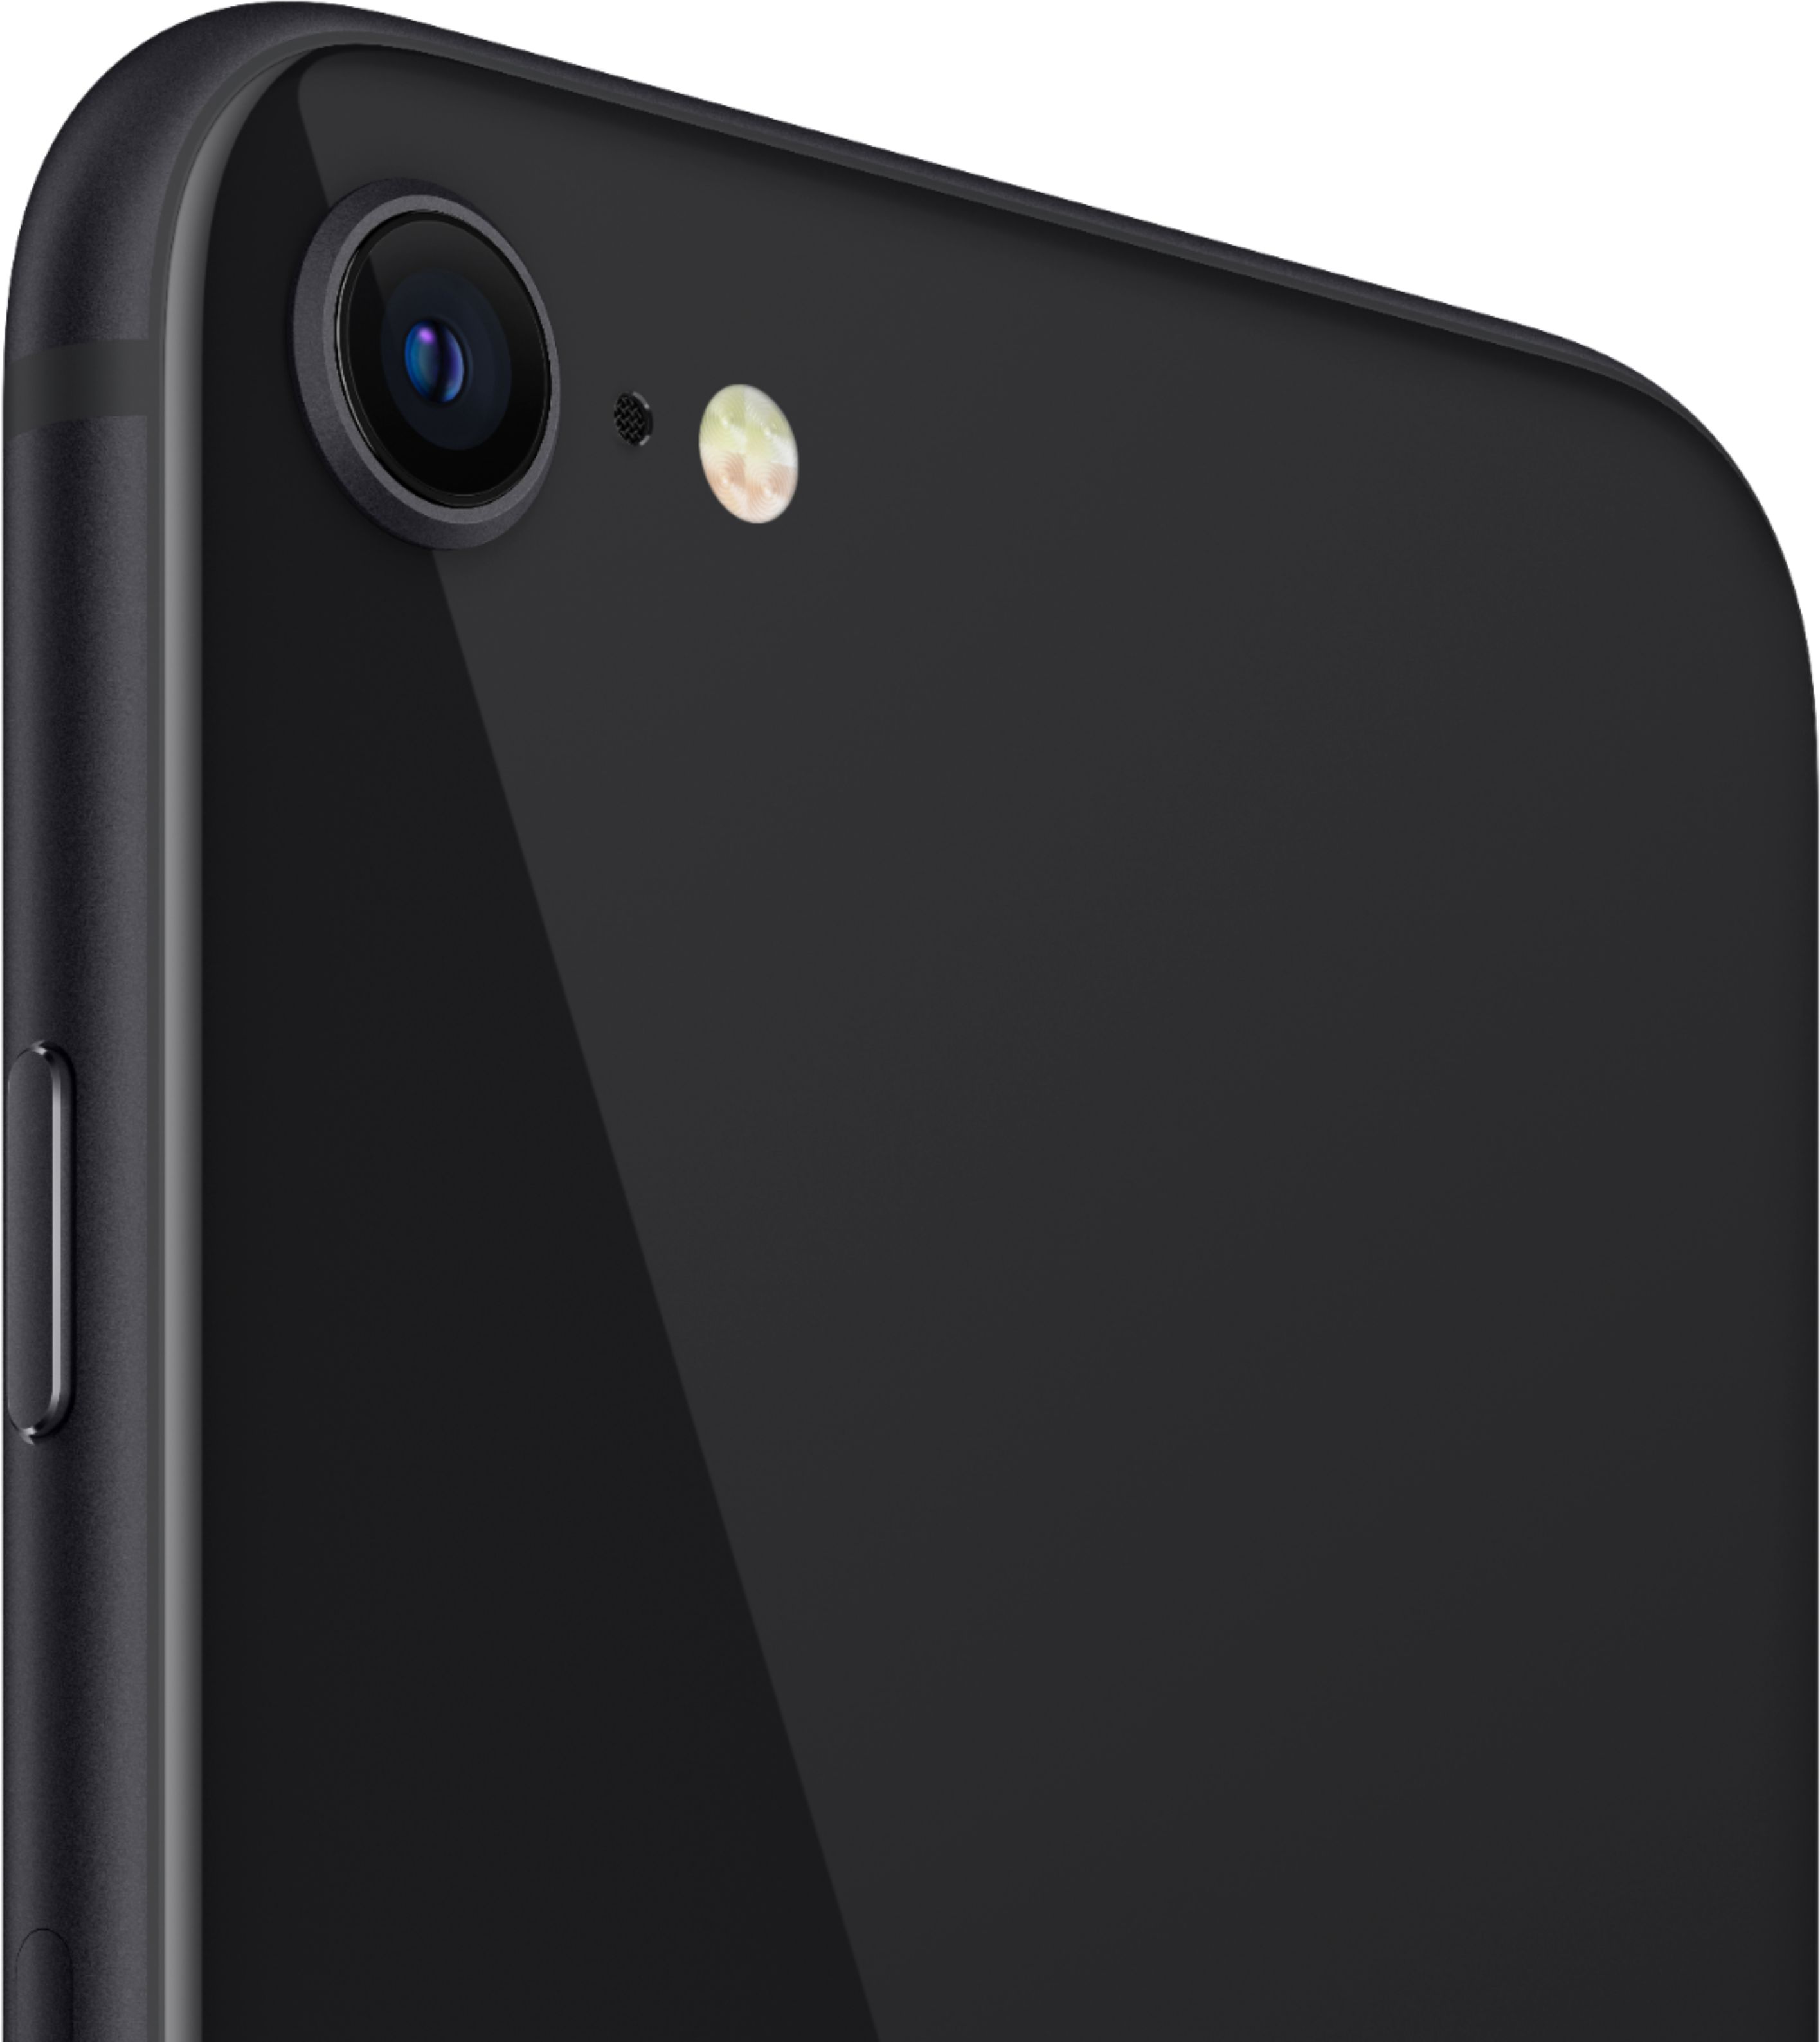 Apple iPhone SE (2nd generation) 128GB (Unlocked) Black MXCT2LL/A 